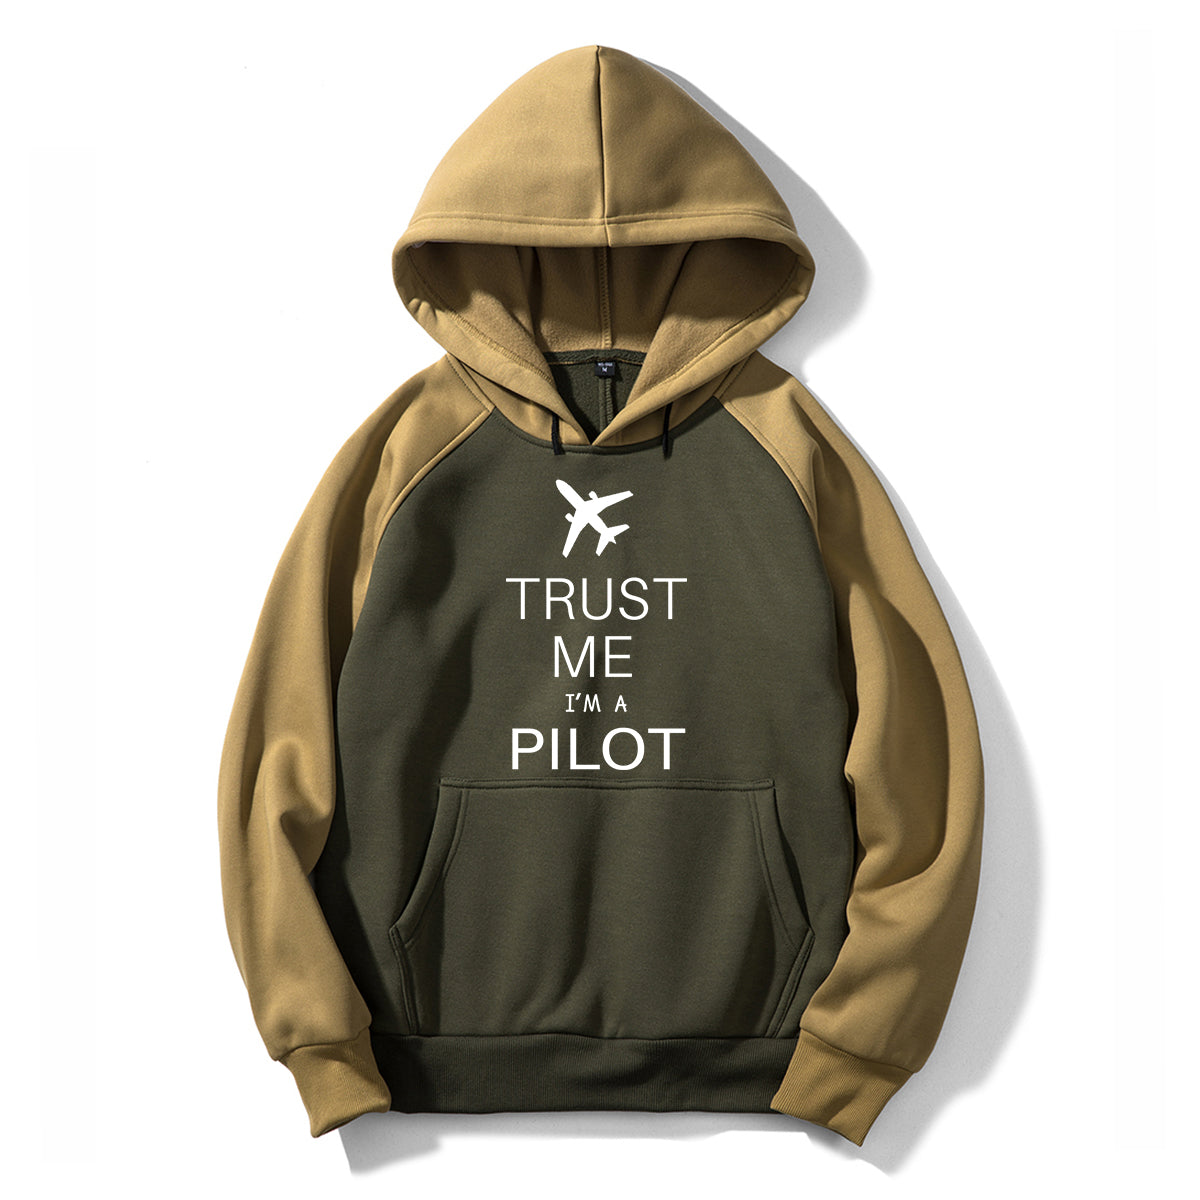 Trust Me I'm a Pilot 2 Designed Colourful Hoodies